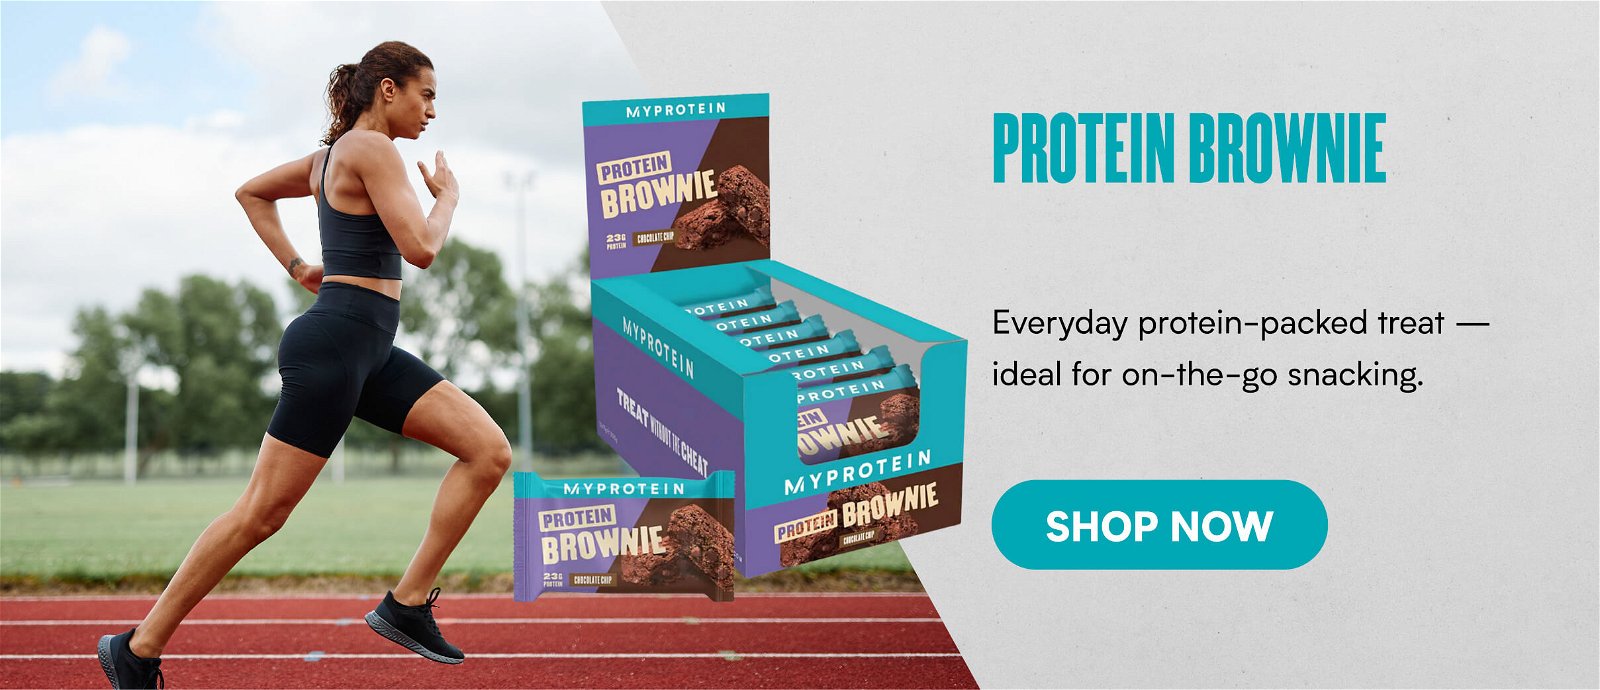 Protein brownie